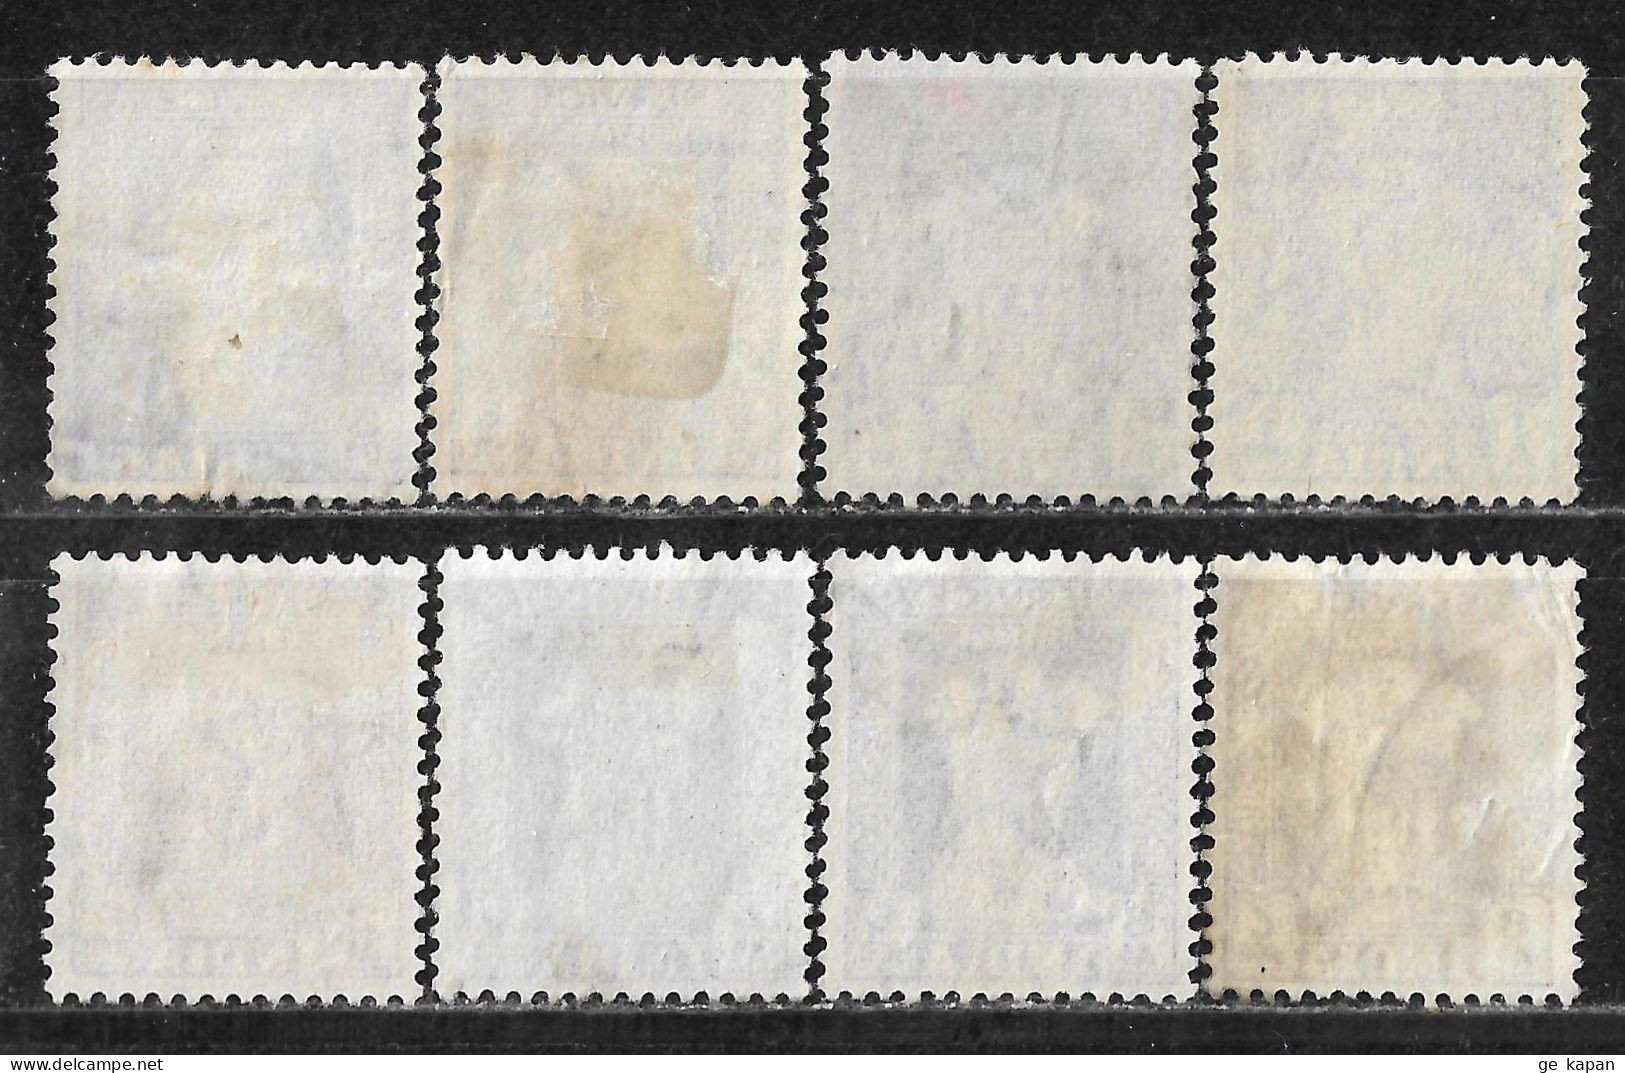 1950 INDIA SET OF 8 OFFICIAL USED STAMPS (Michel # 117-121,124-126) CV €2.20 - Dienstmarken